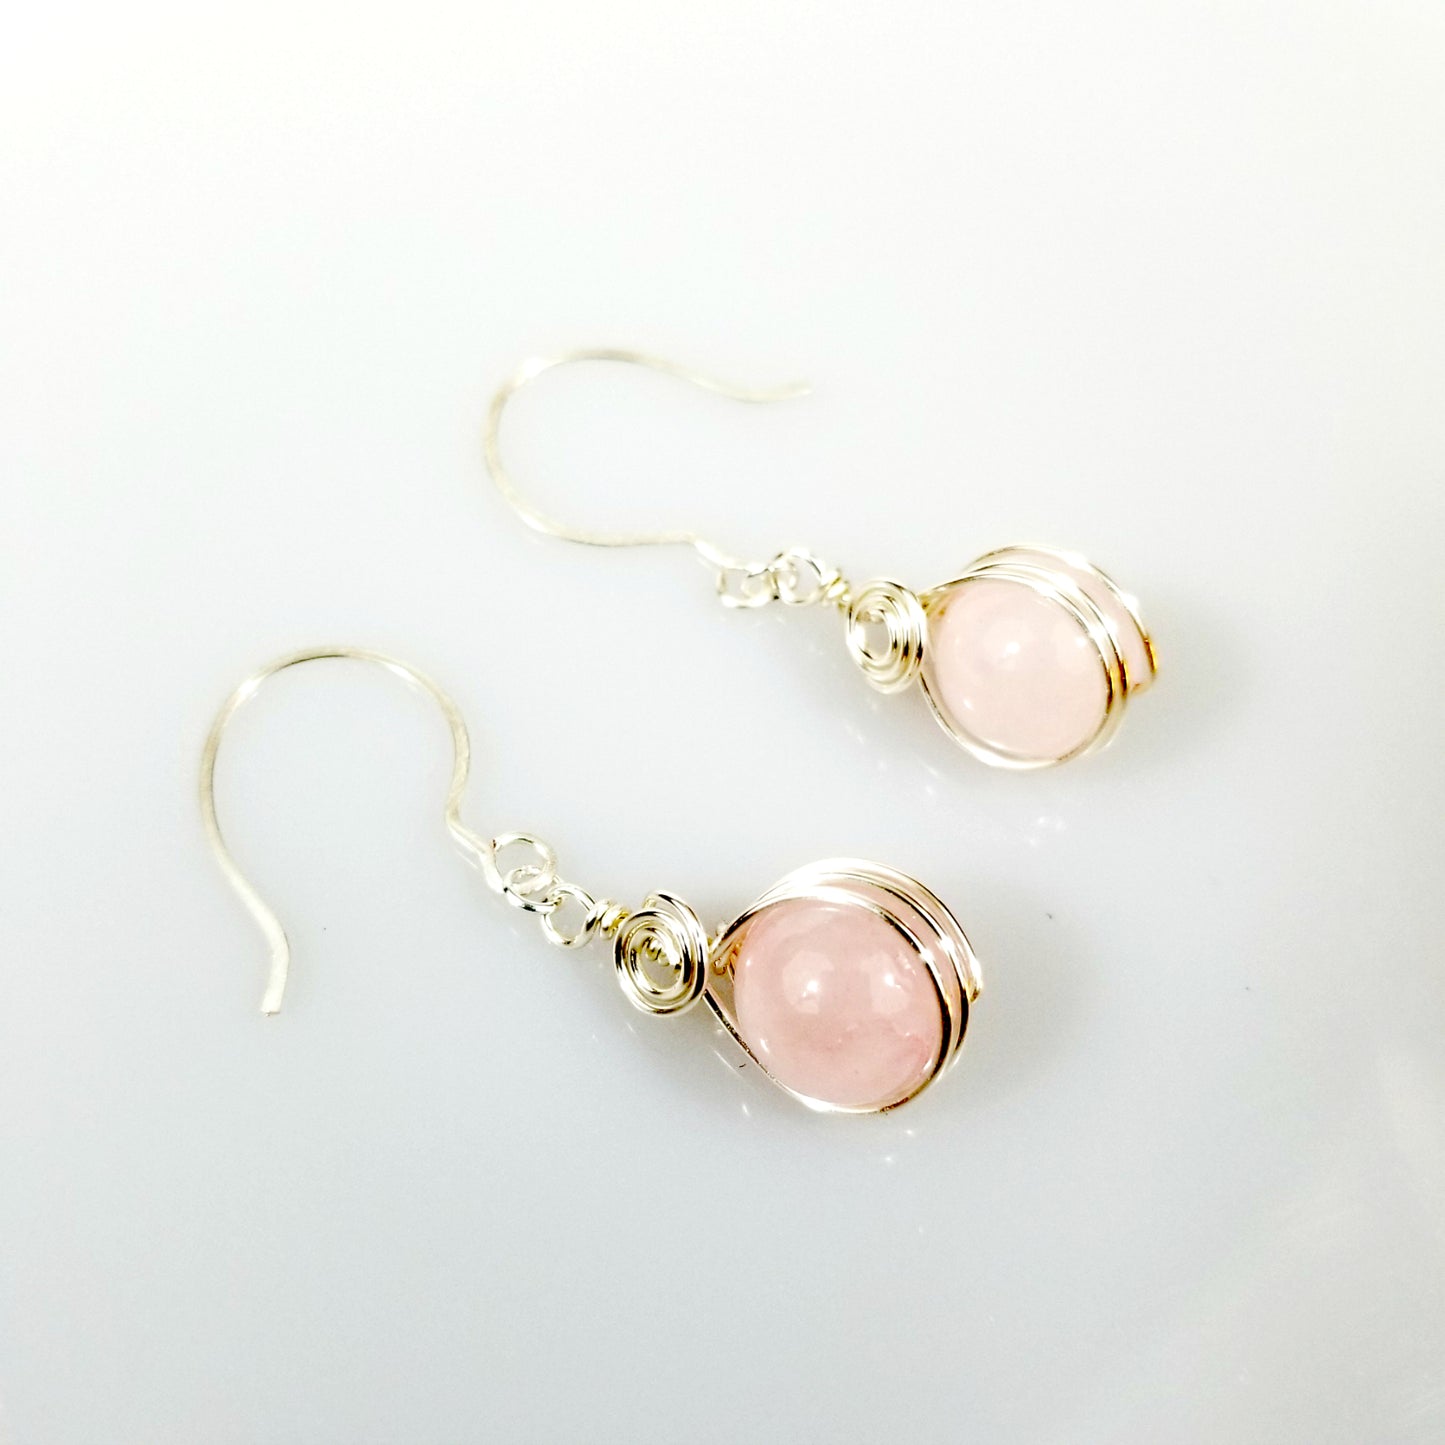 Rose Quartz Earrings, Pink Stone Earrings, Wire Wrapped Jewelry